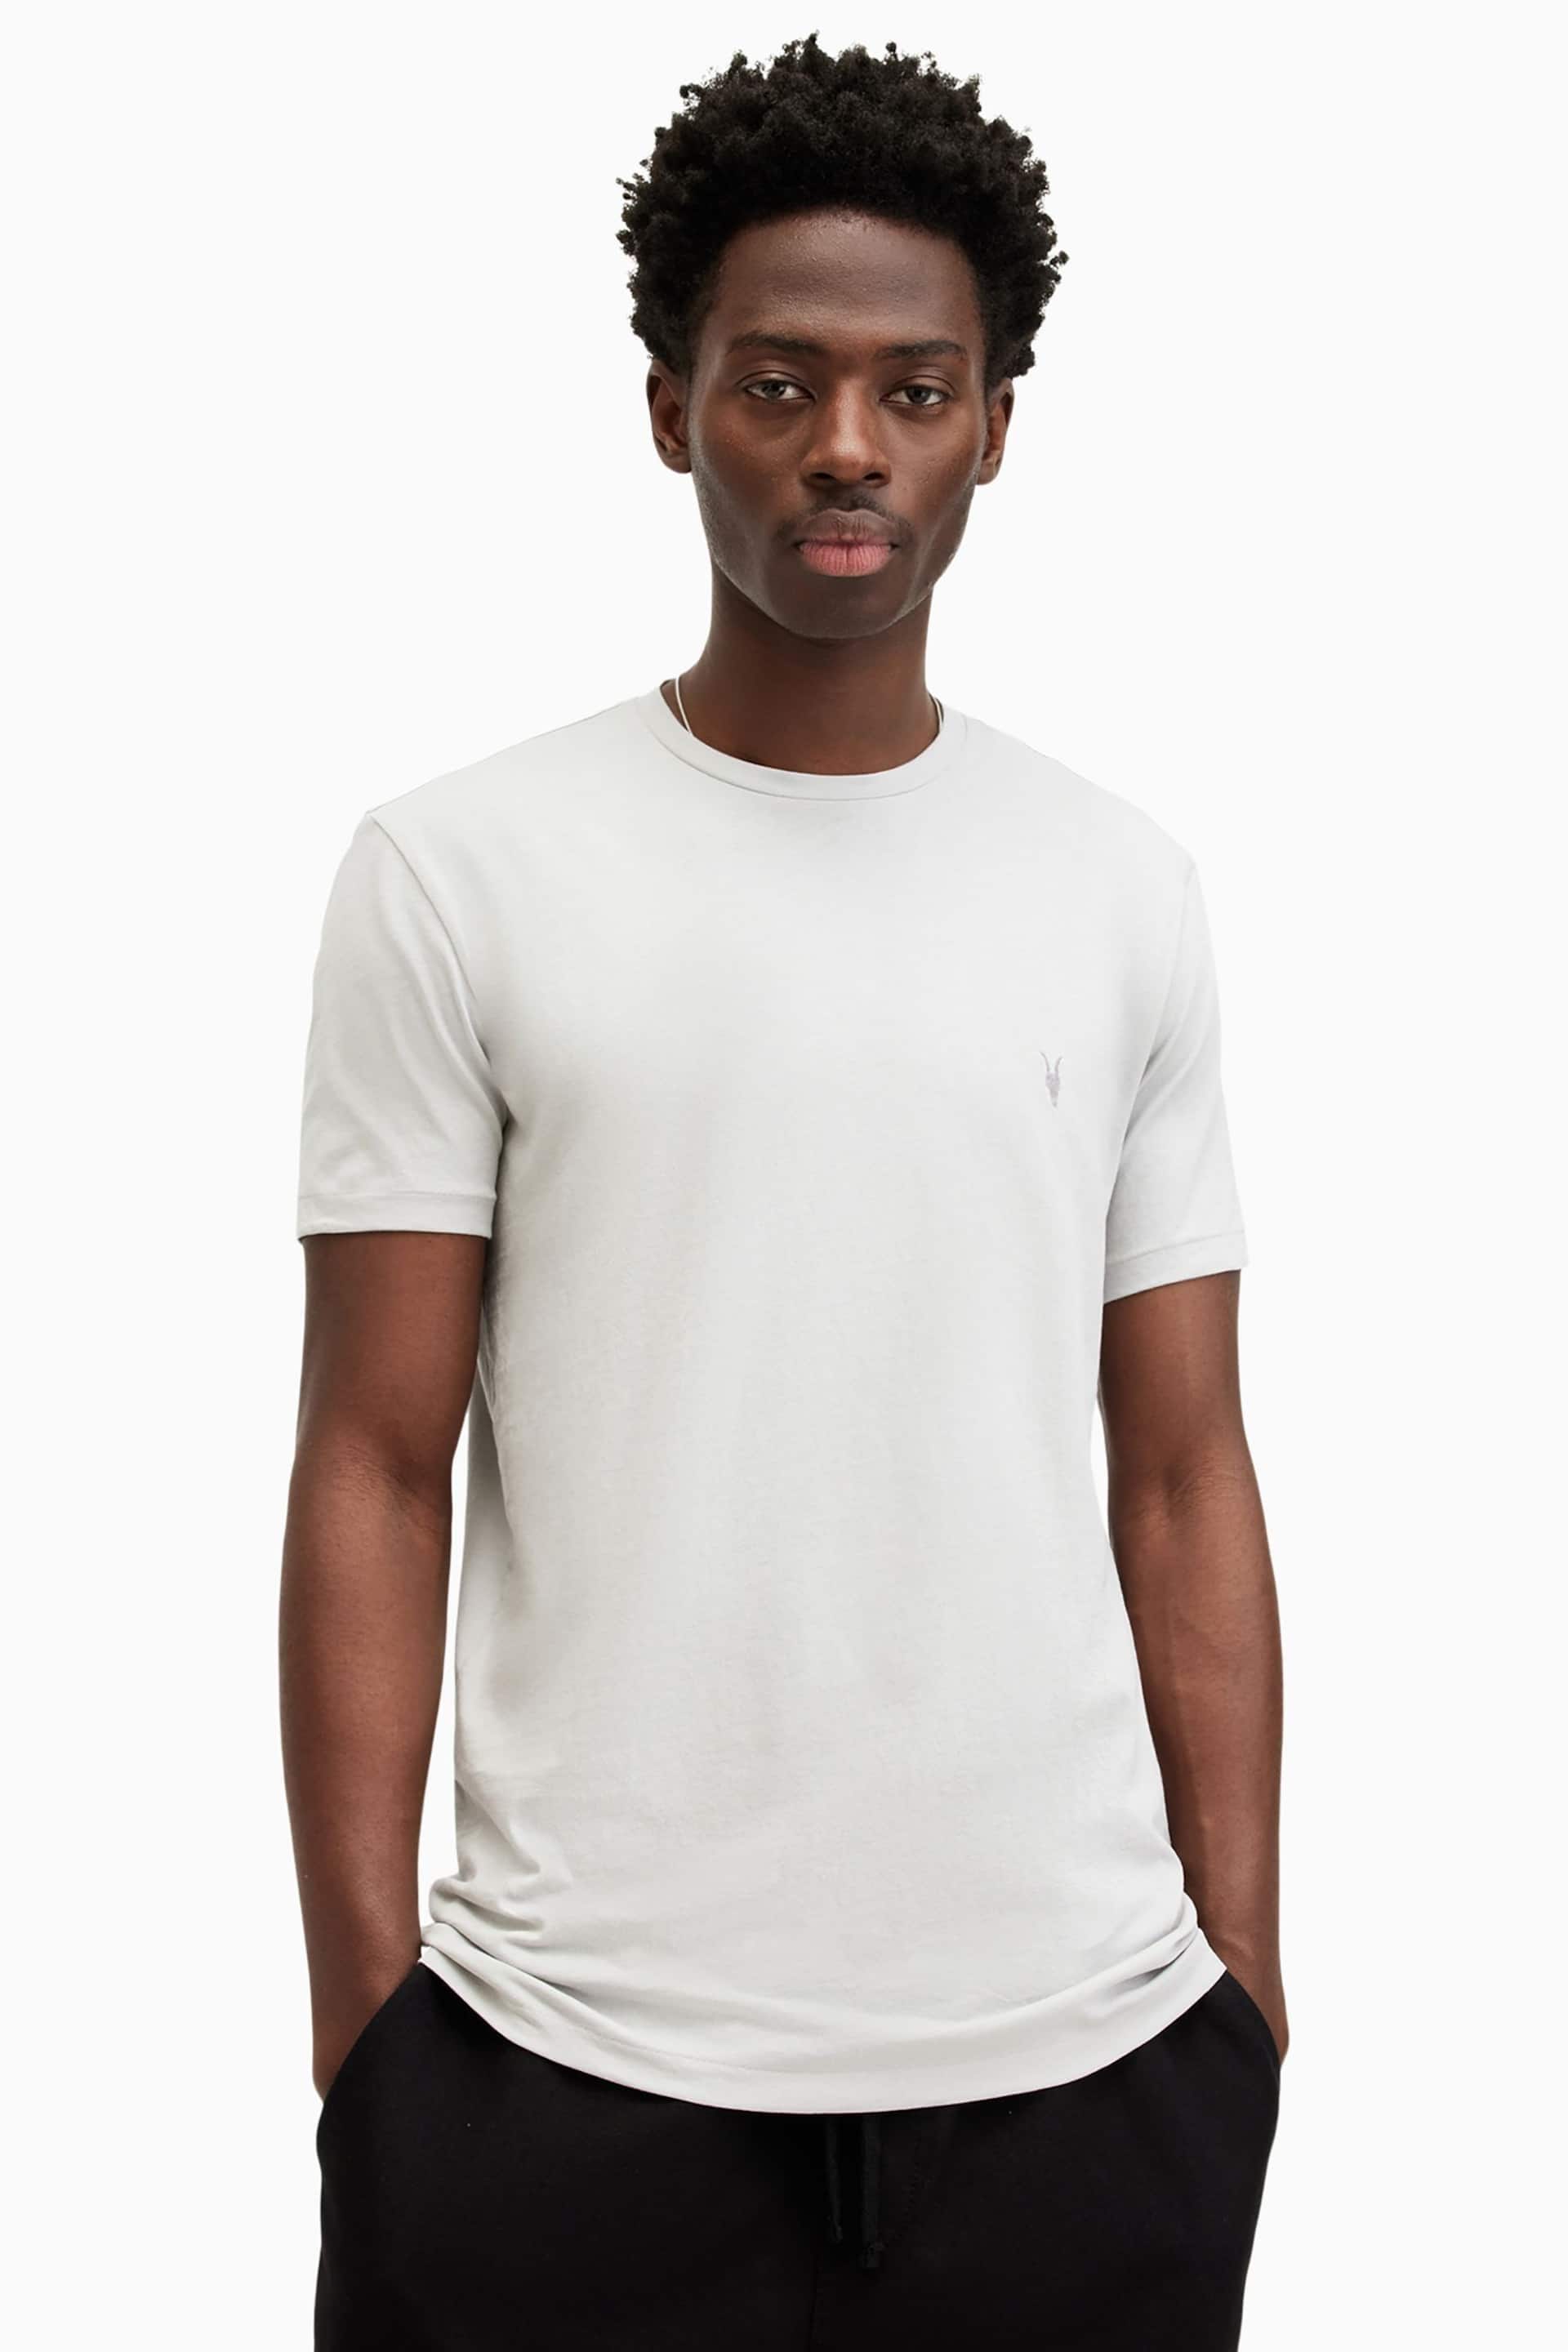 AllSaints Grey Tonic Short Sleeve Crew T-Shirt 3 Pack - Image 4 of 8